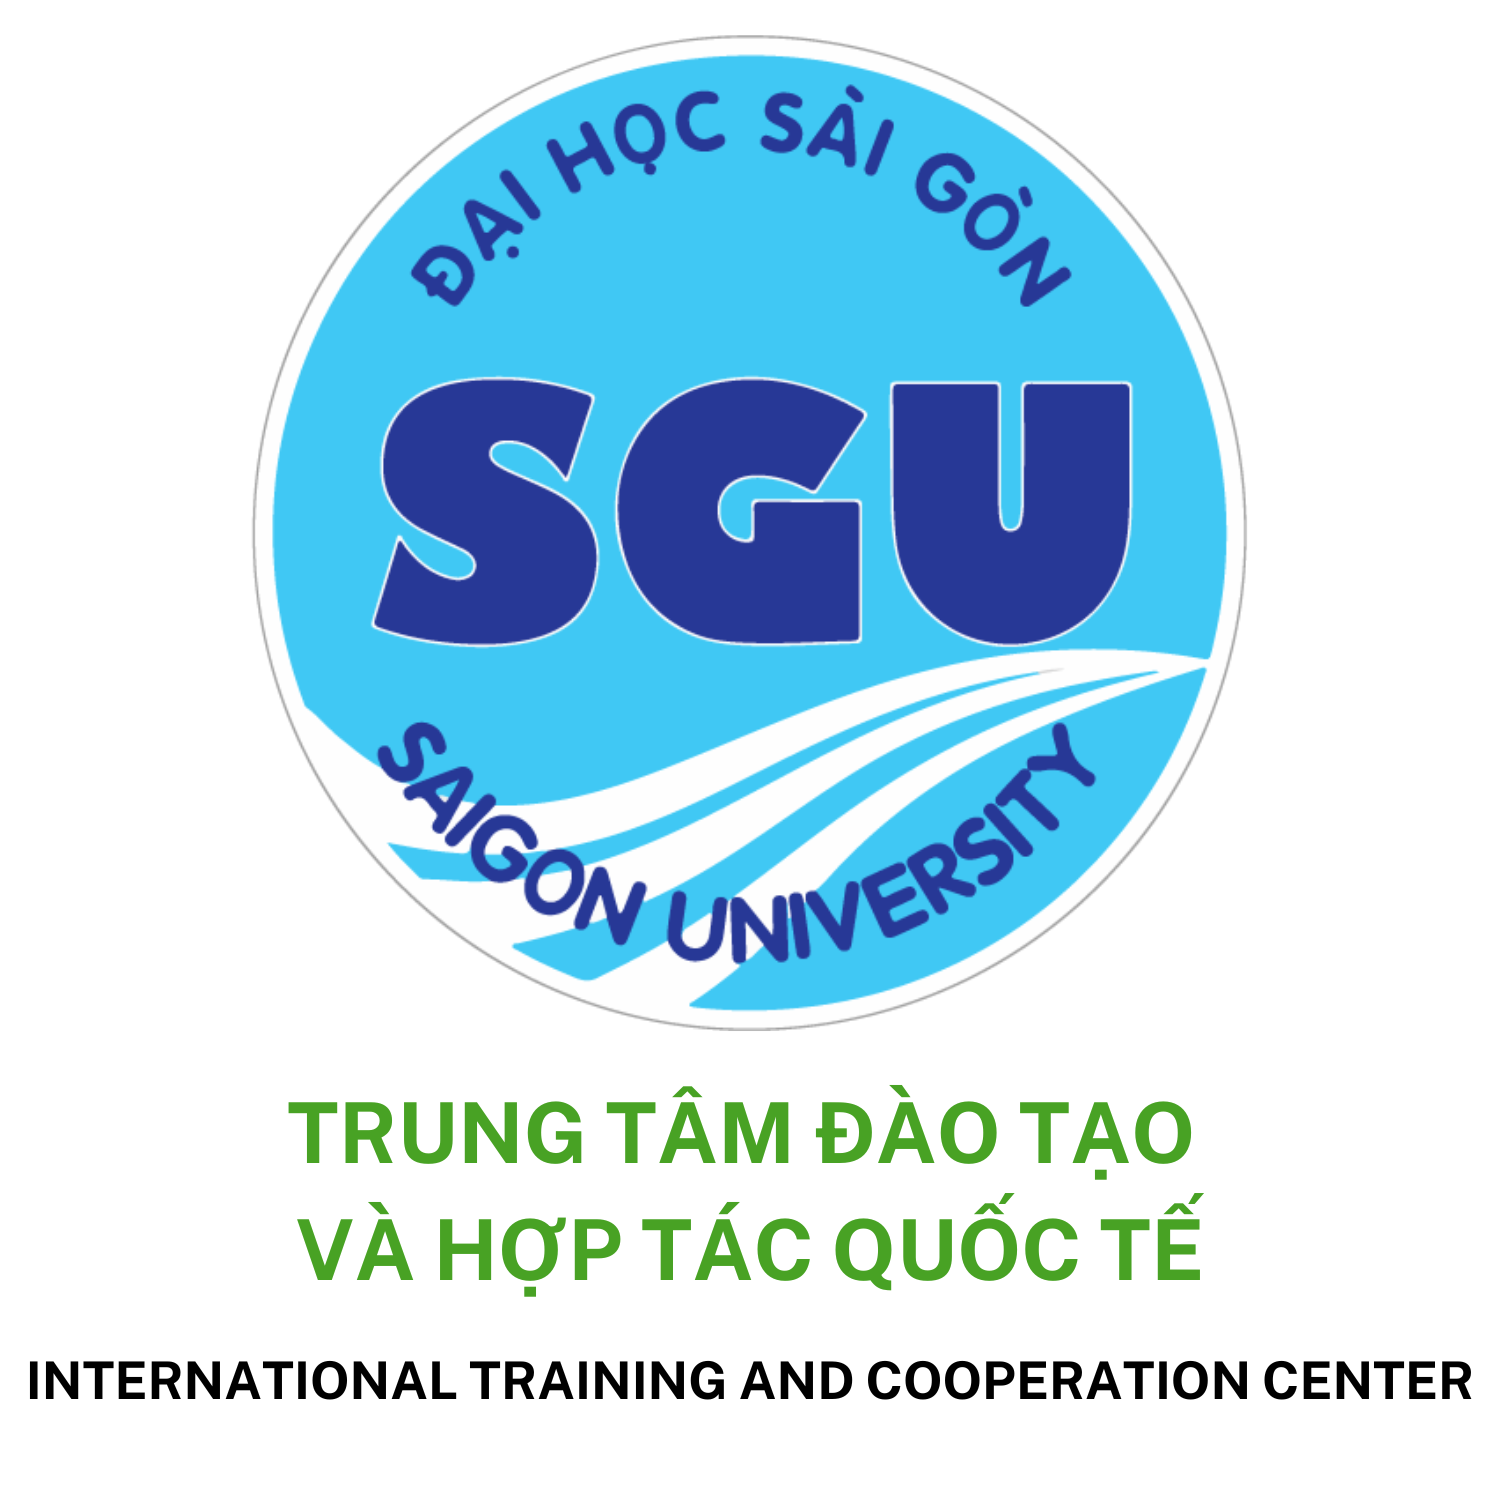 International Training and Cooperation Center